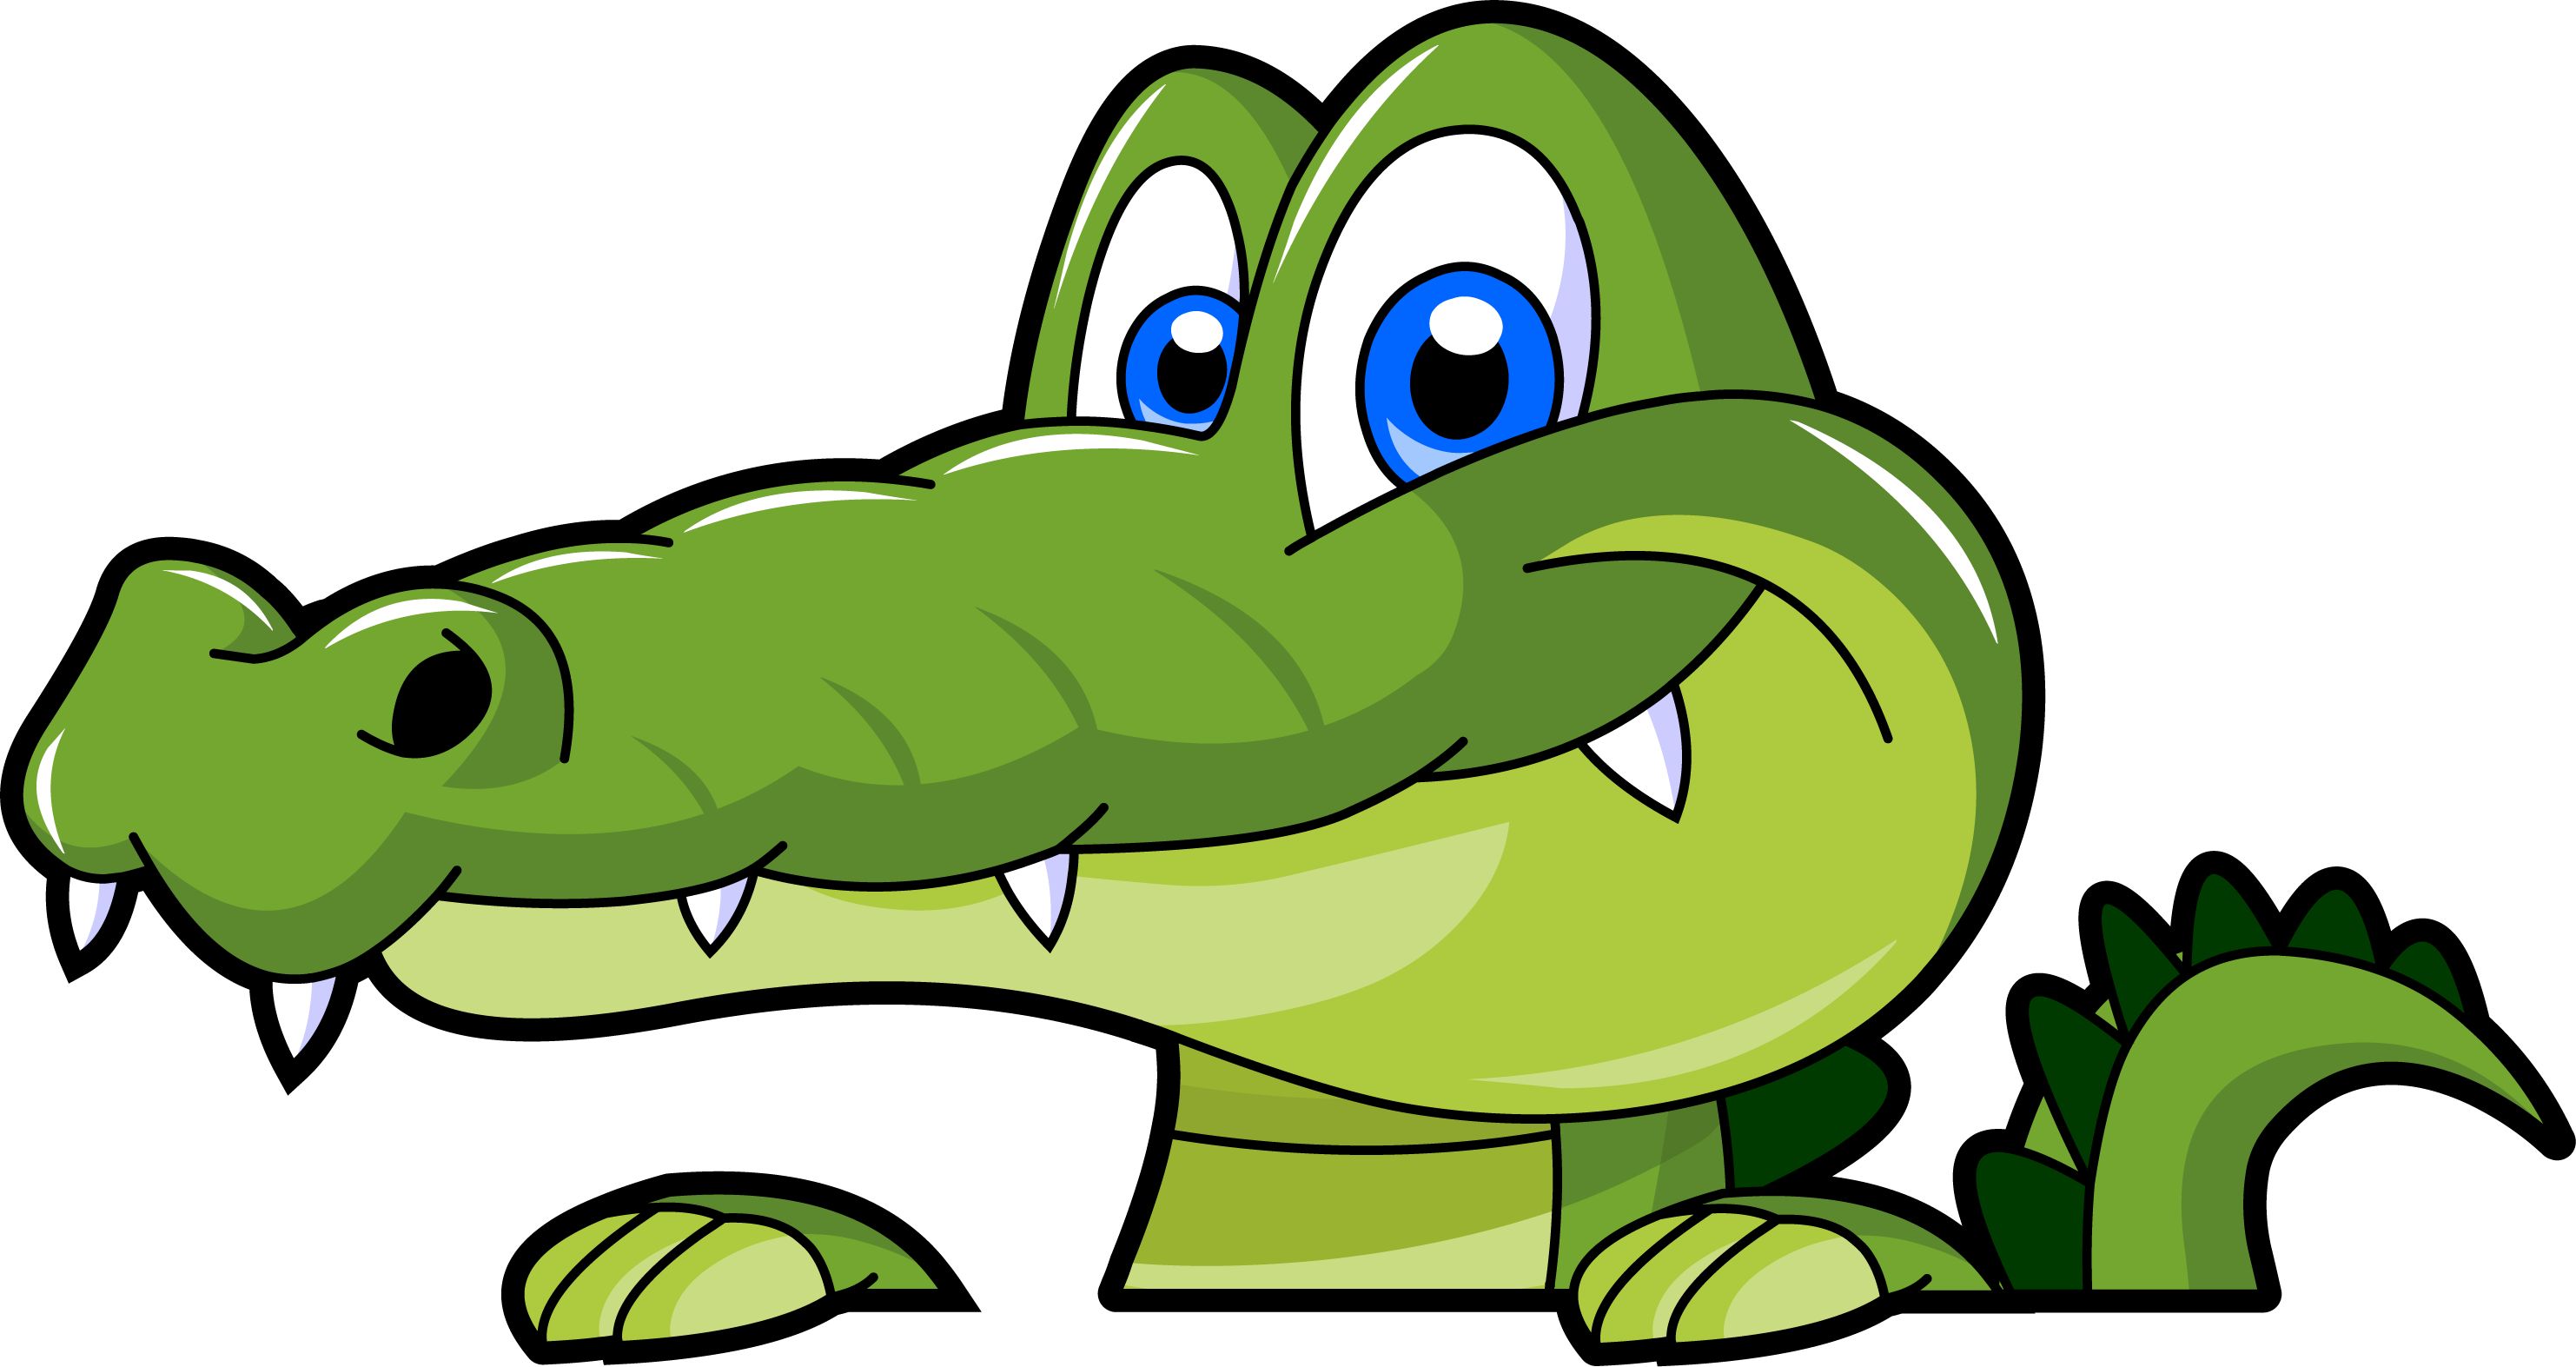 Swamp alligator cartoon . - Alligator Clip Art